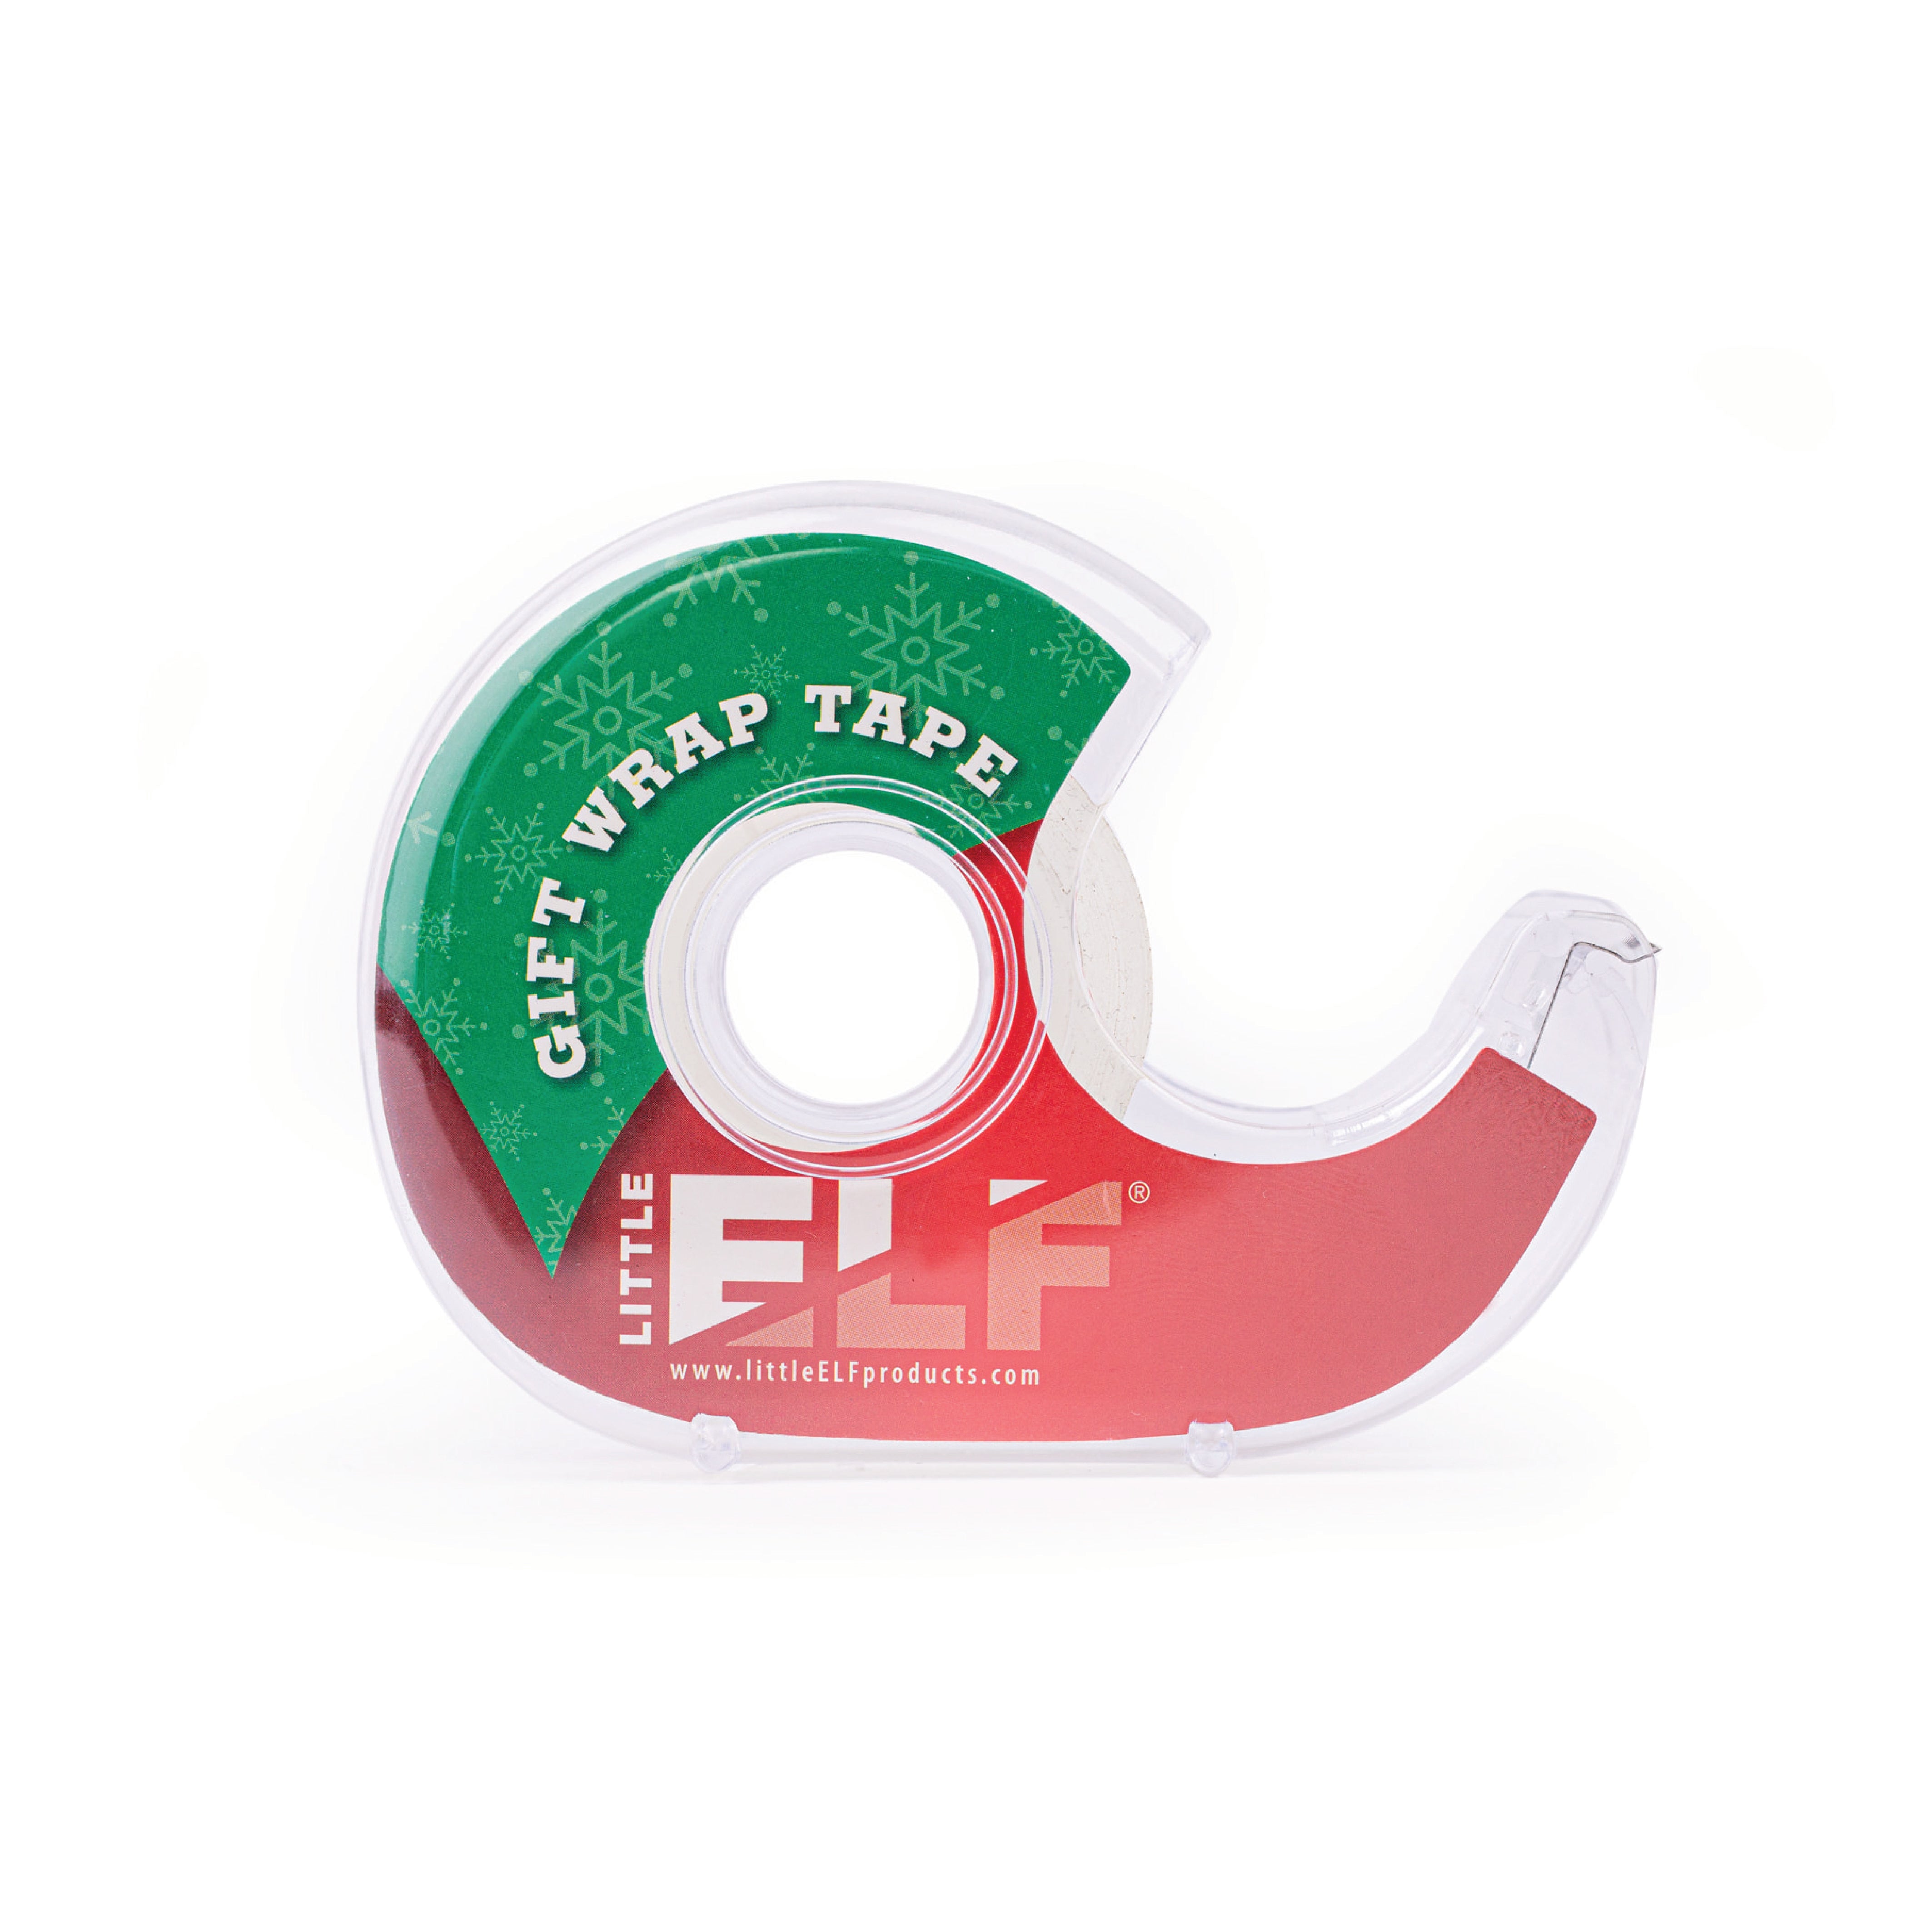 Little ELF Gift Wrap Tape (6-Rolls) – Little ELF Products, Inc.